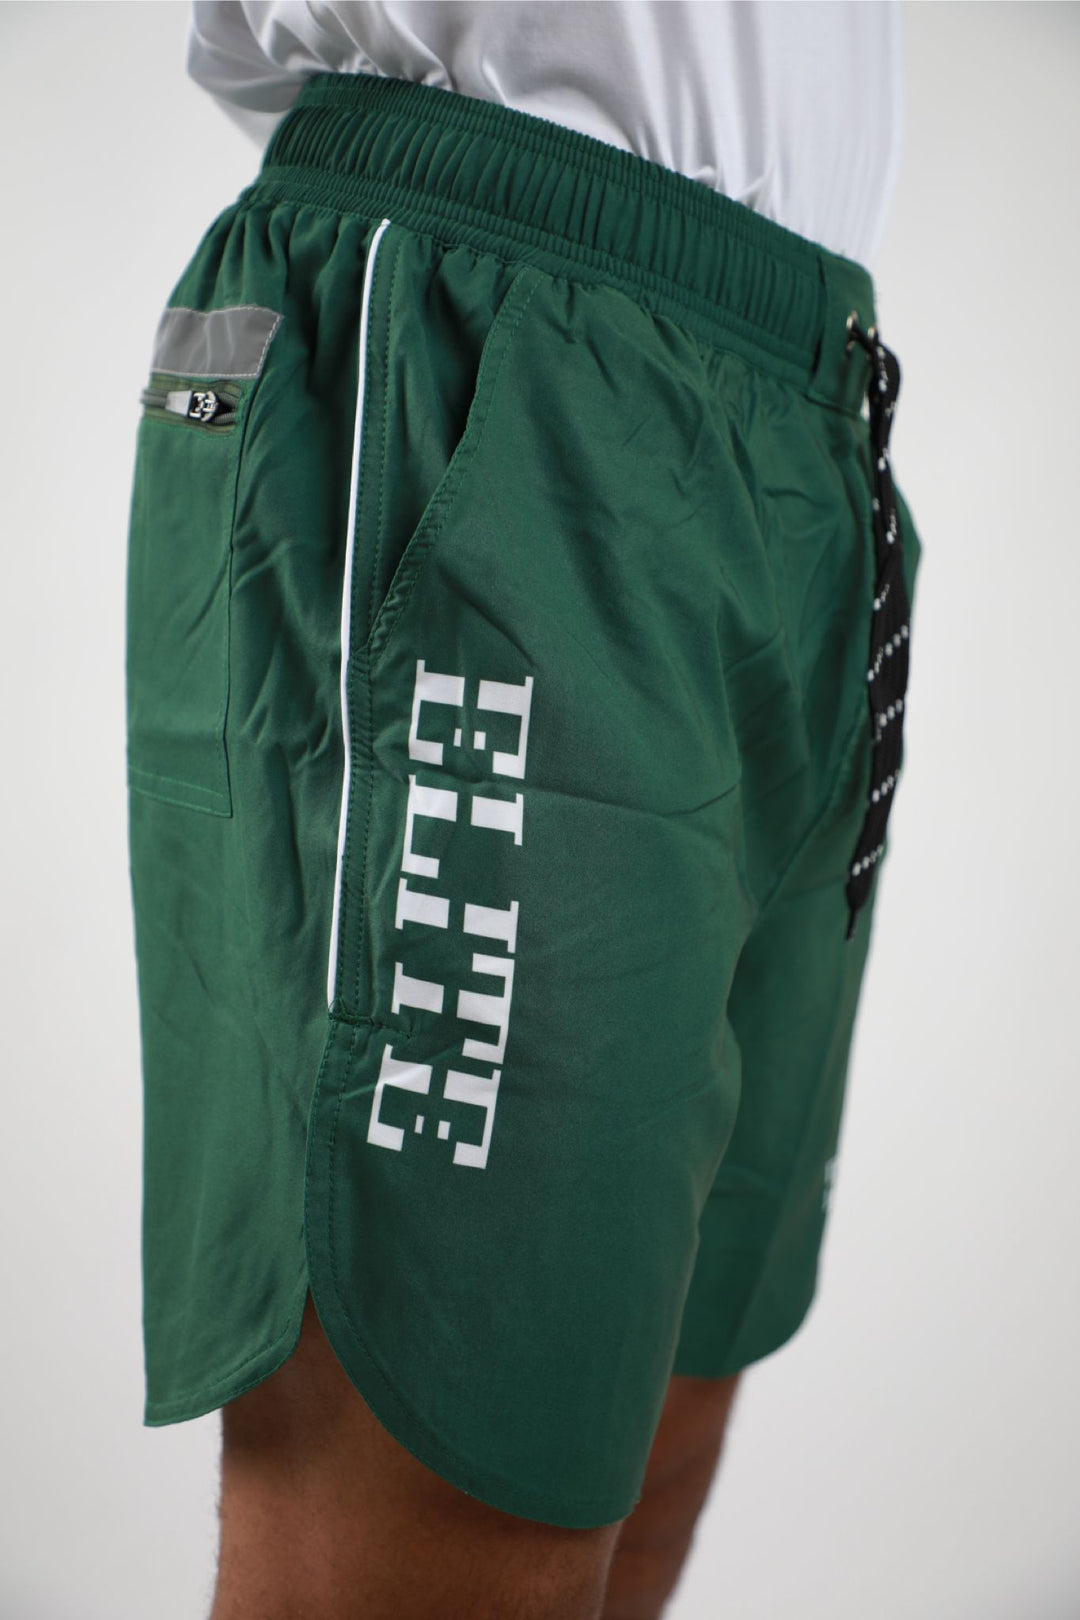 Elite Shorts  - Dark Green